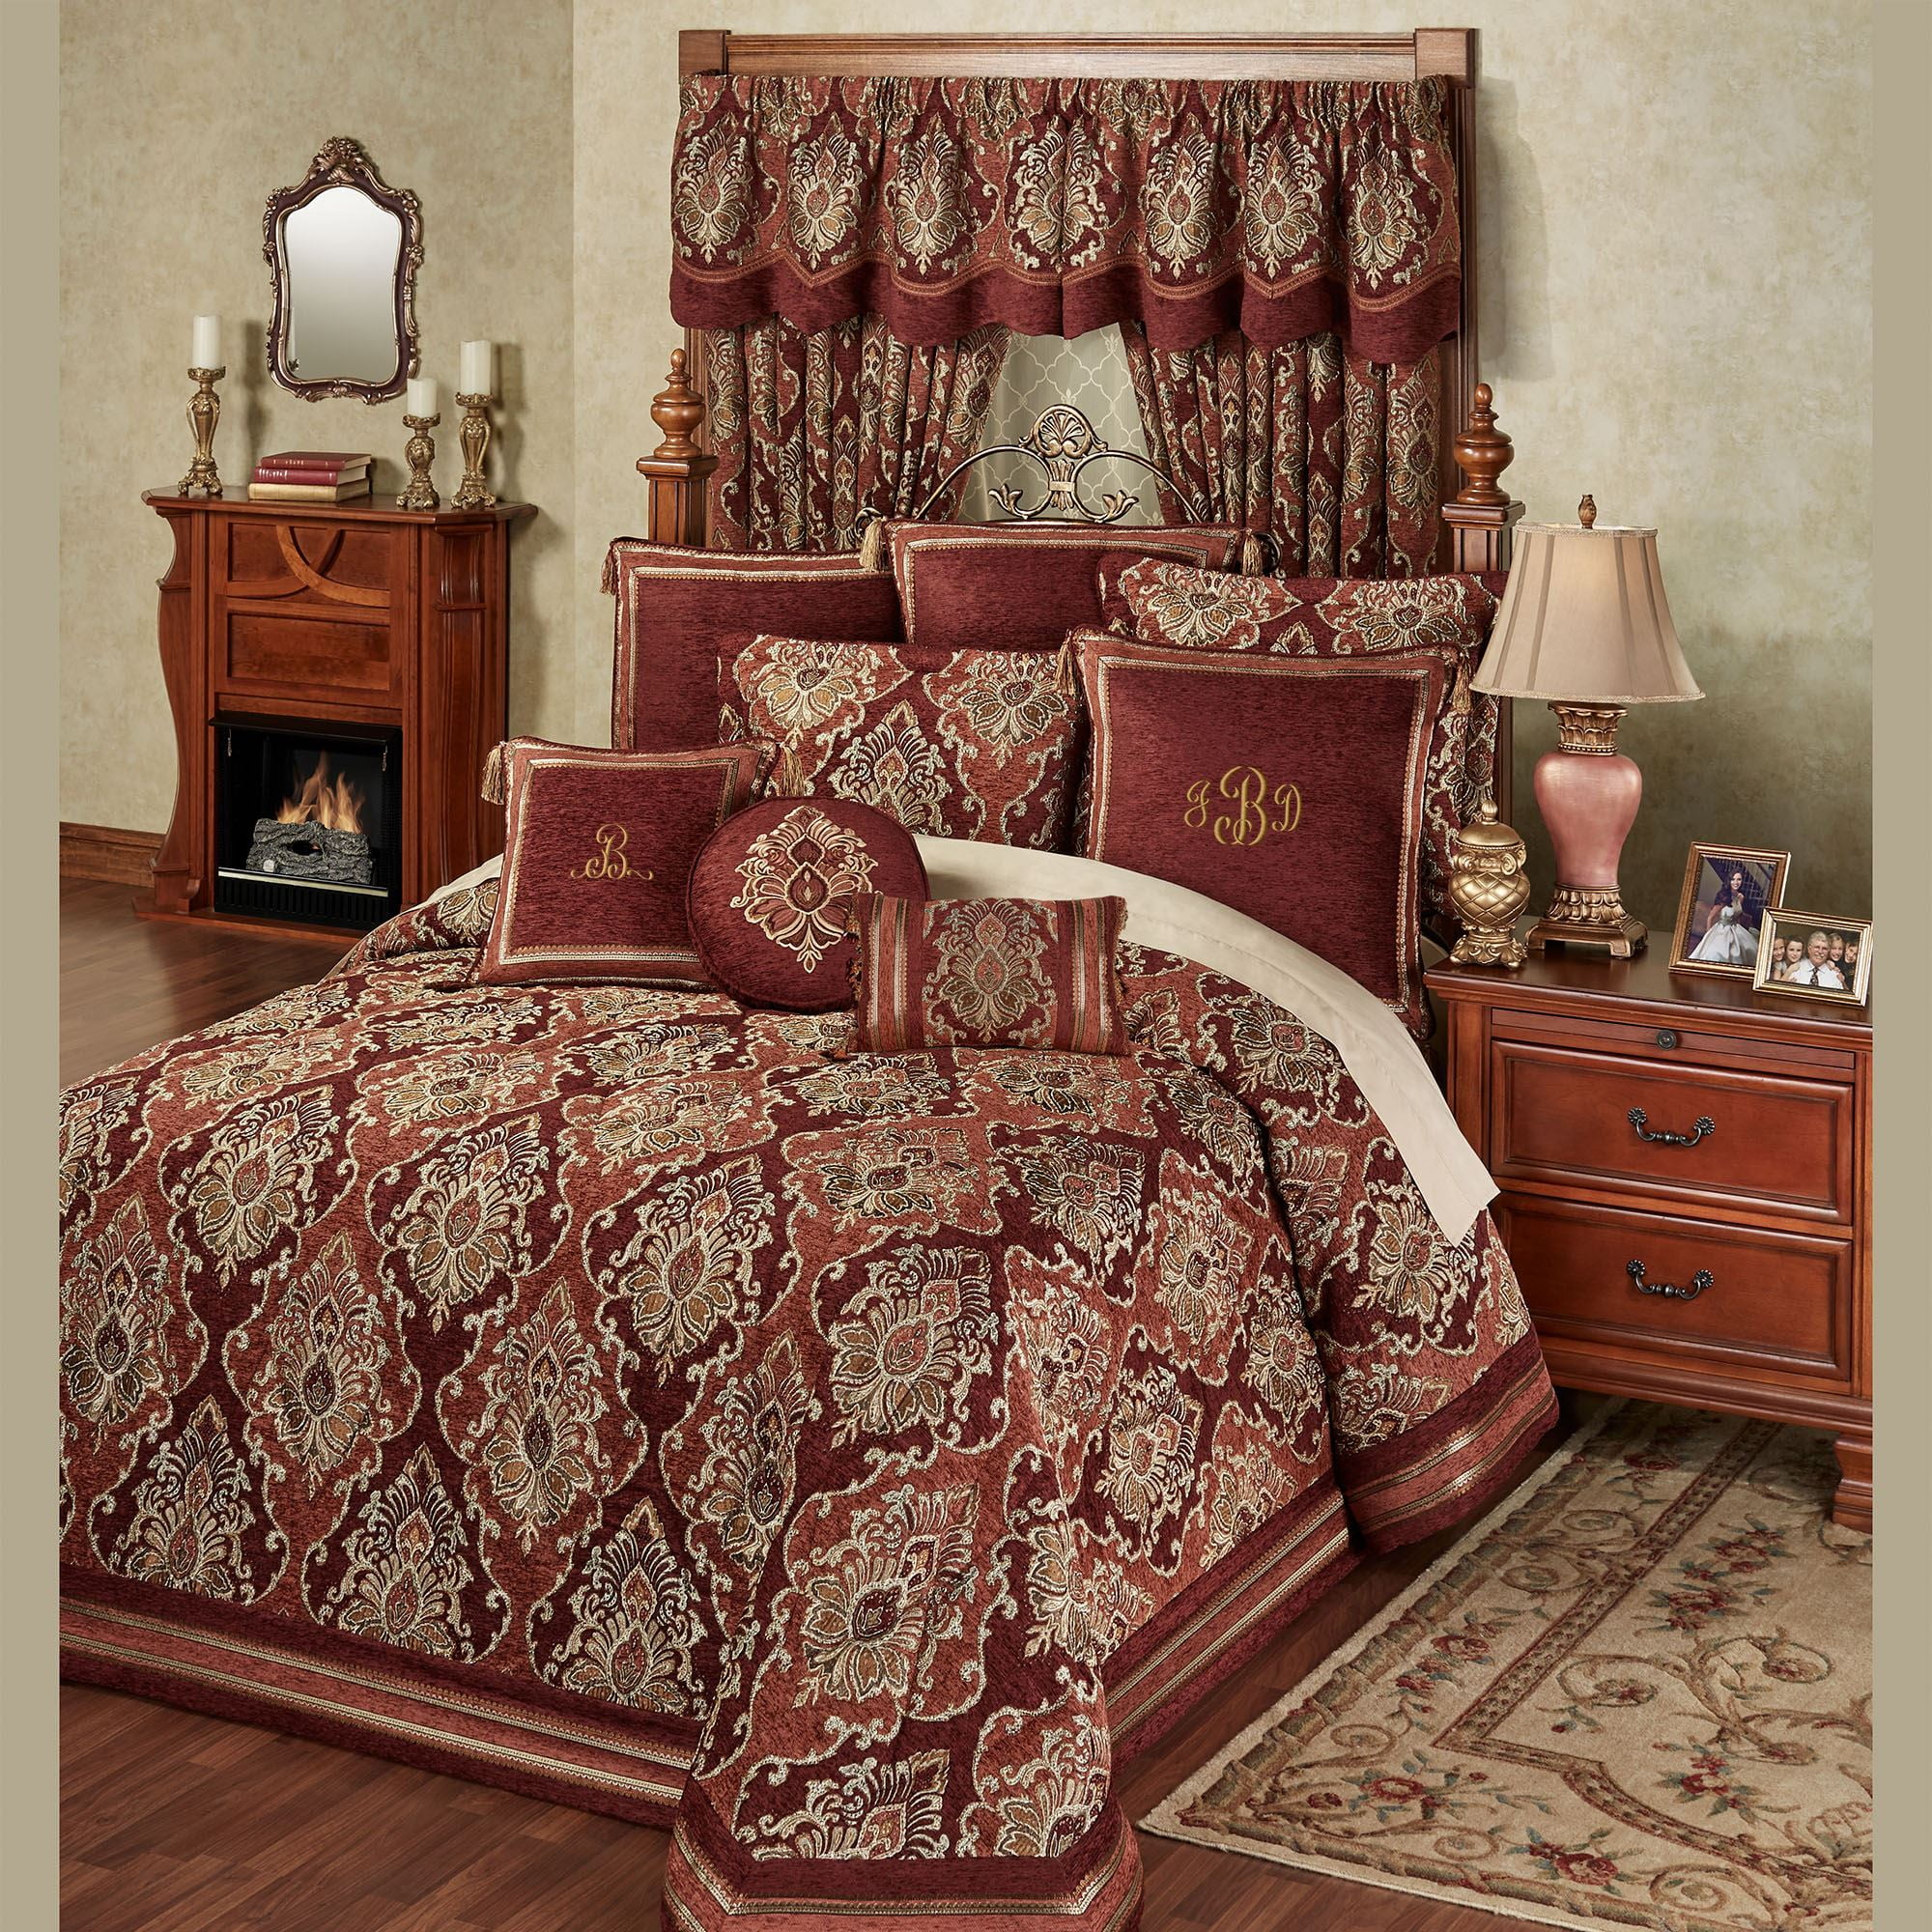 Victorian Grande Color Royal Aesthetic Queen - Decor Bedding Grande Style Elegant Bedspread - Bedspread for Chenille Ravenna Jacquard Burgundy - Quilted -